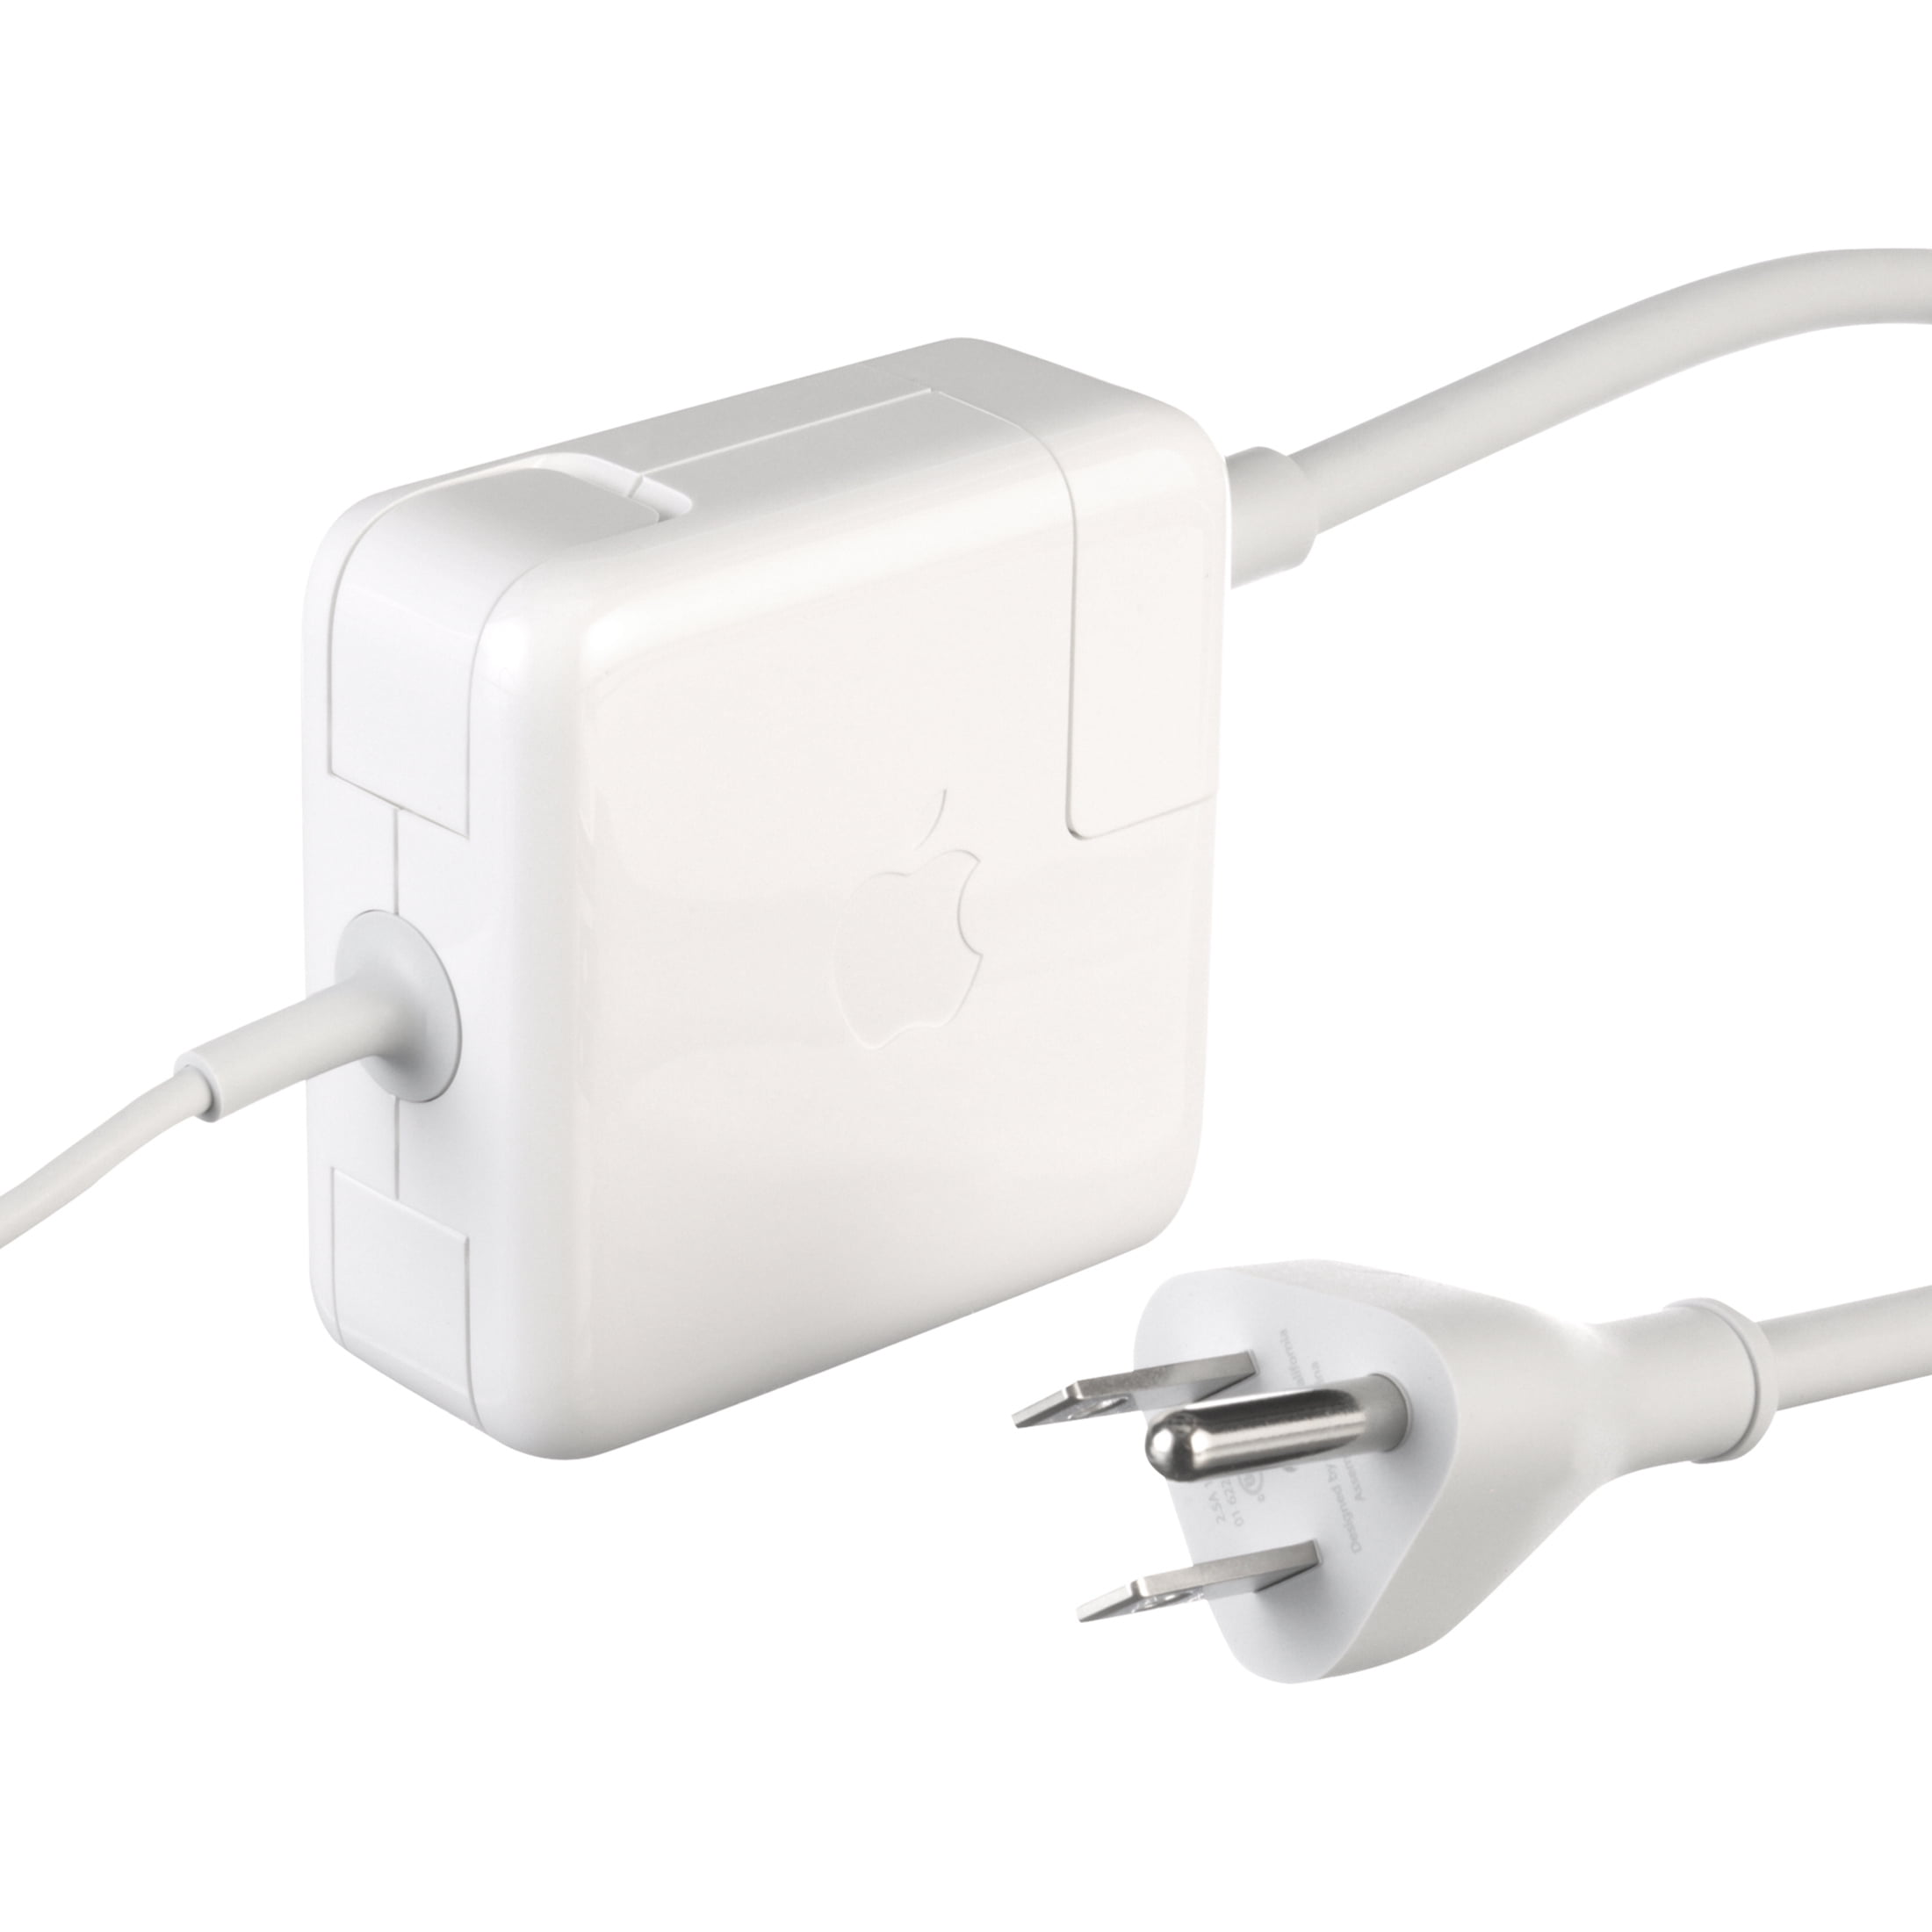 Consomac : MacBook Air M2 : Apple lance des câbles MagSafe assortis